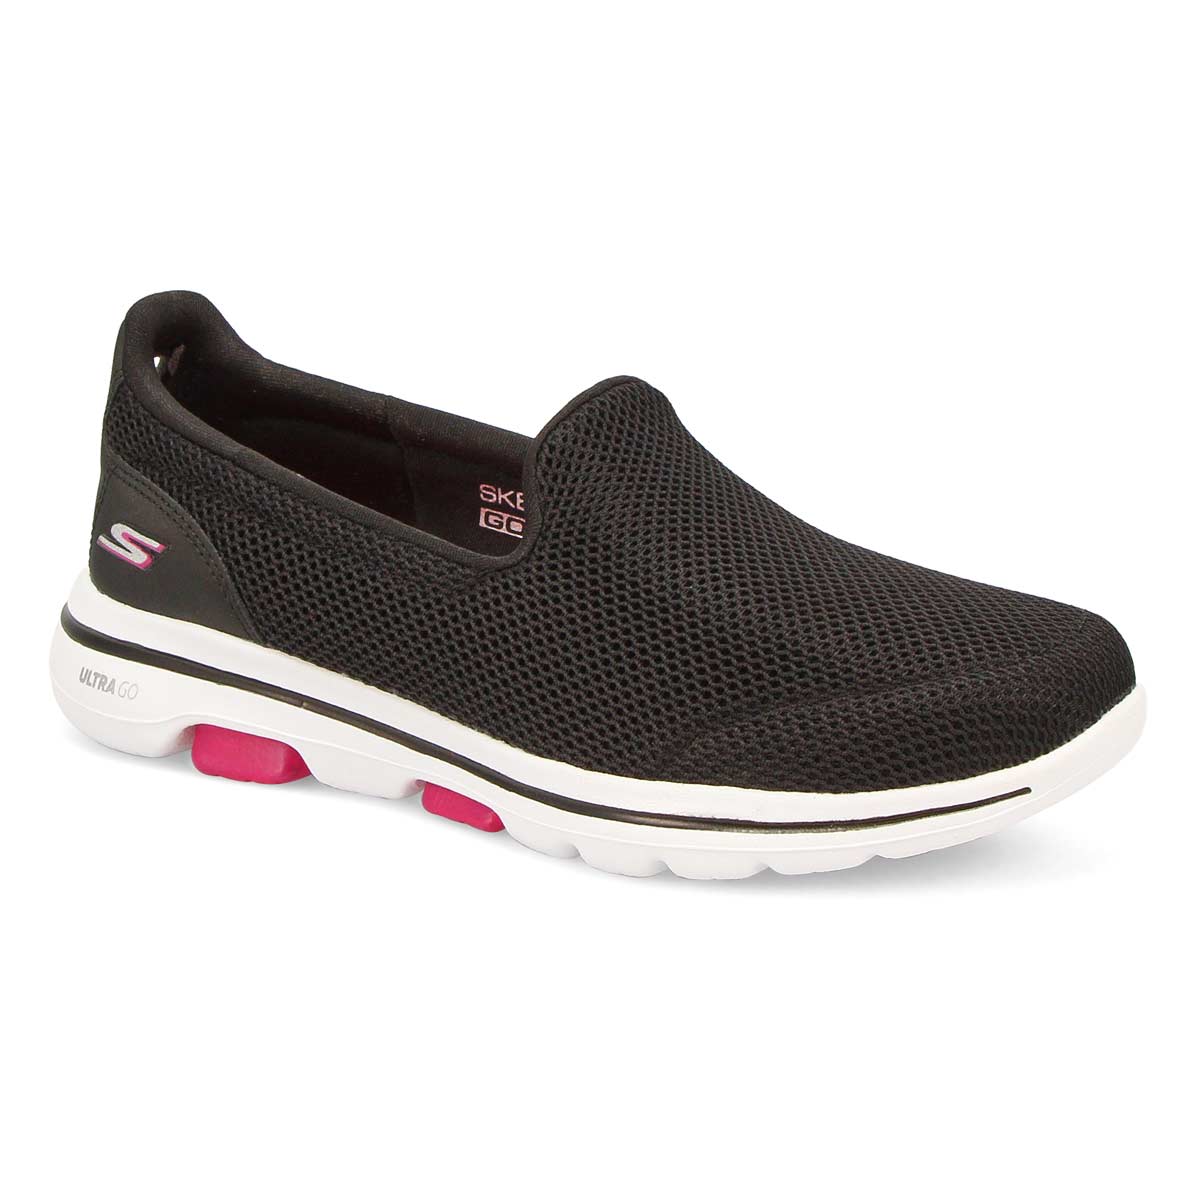 Skechers Women's Go Walk 5 Shoe - Black/Black | SoftMoc.com